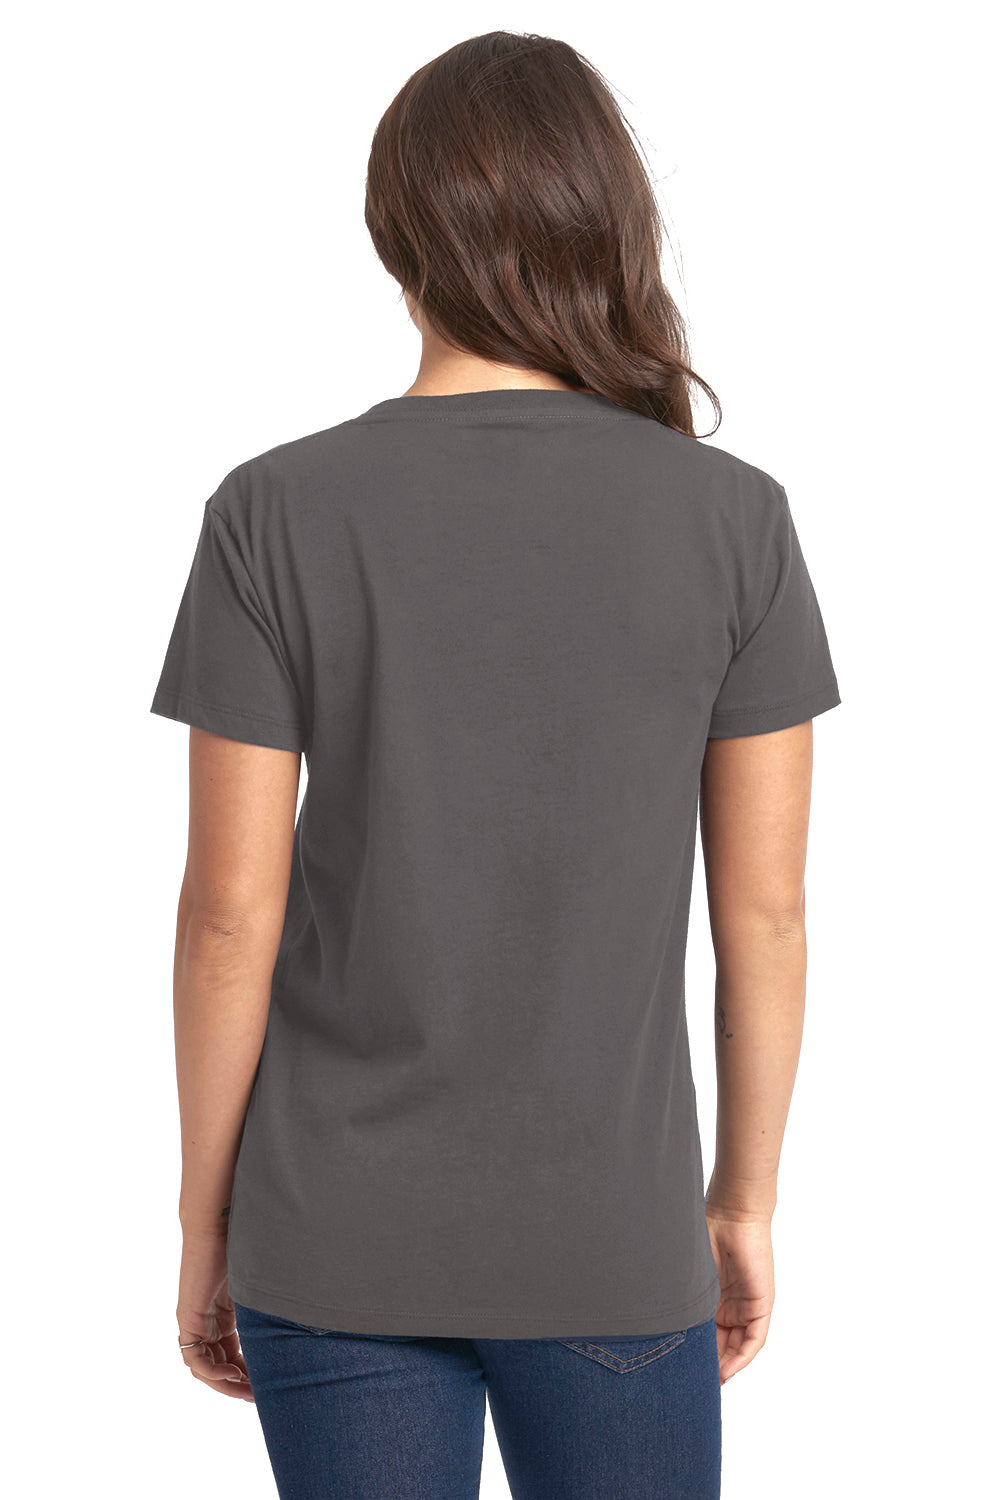 Next Level 3940 Womens Relaxed Short Sleeve V-Neck T-Shirt Heavy Metal Grey Back